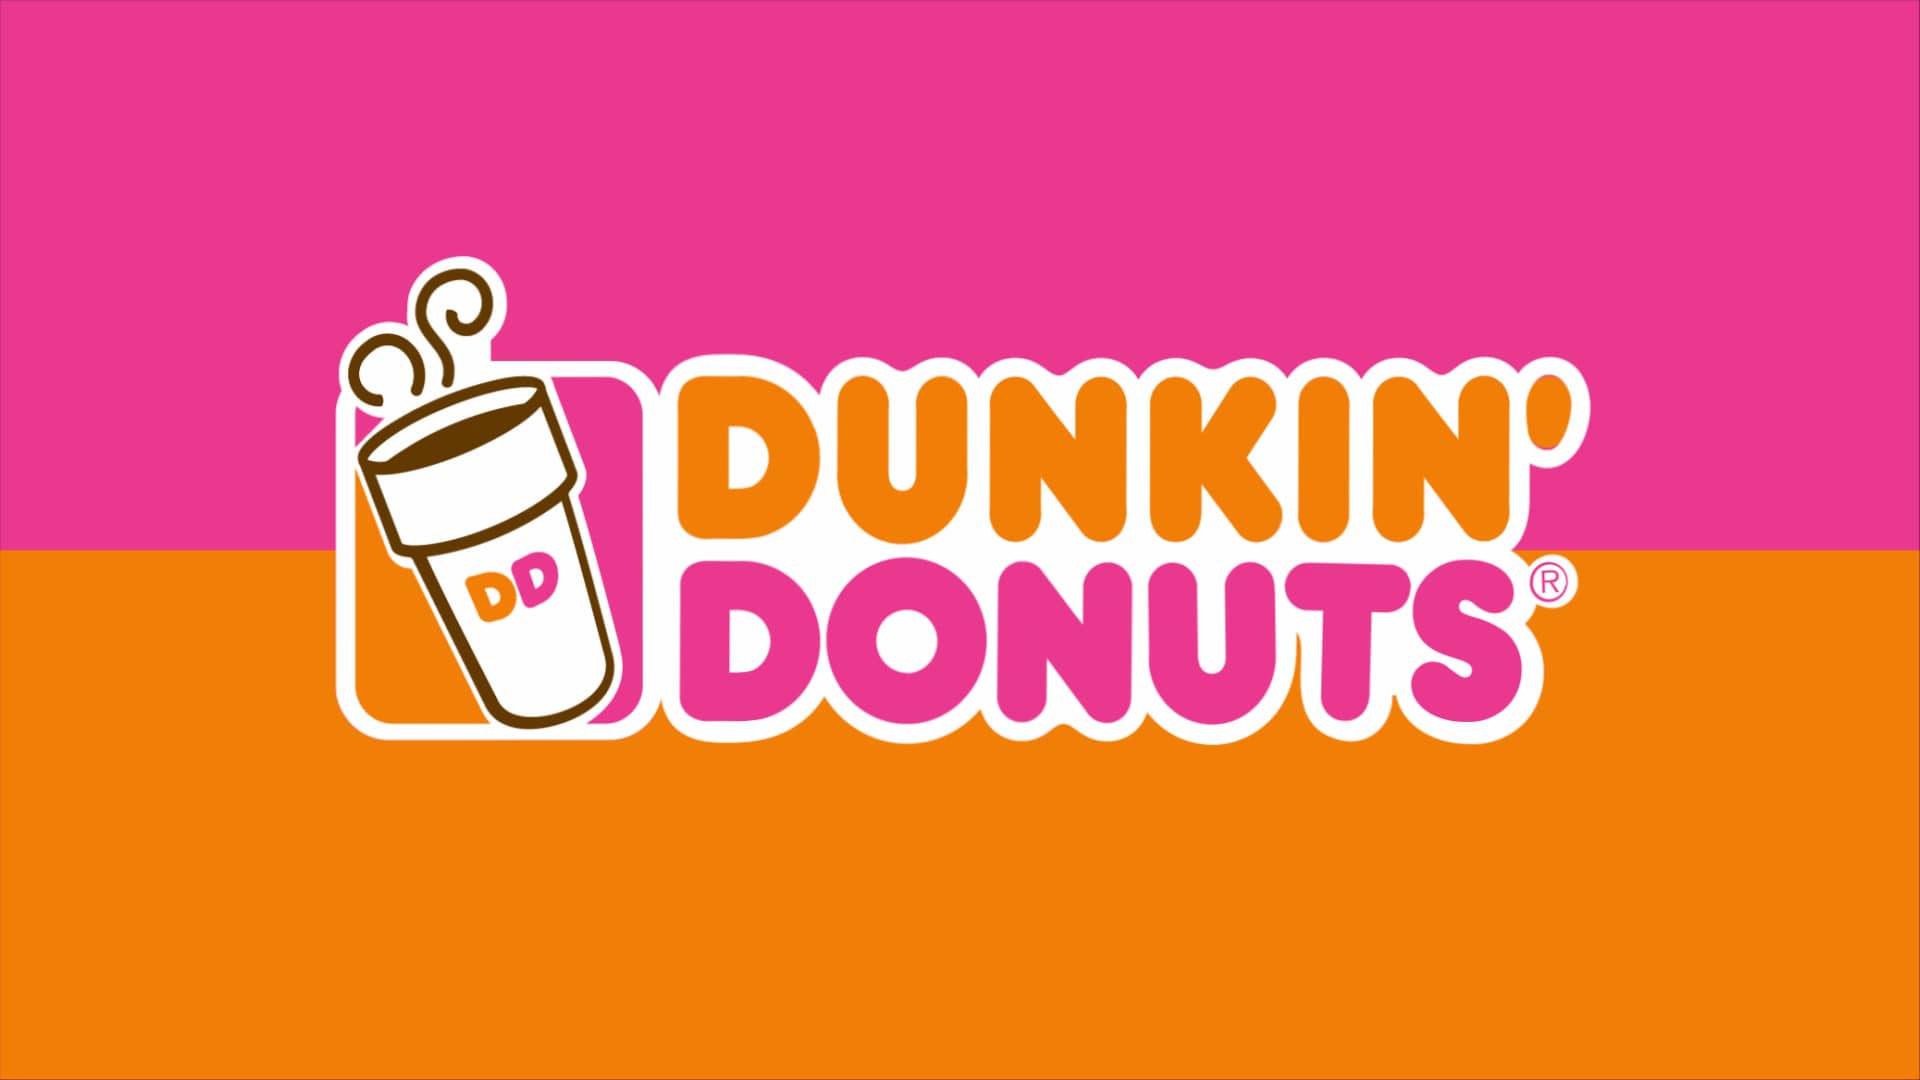 Dunkin' Donuts Animated Logo on Vimeo